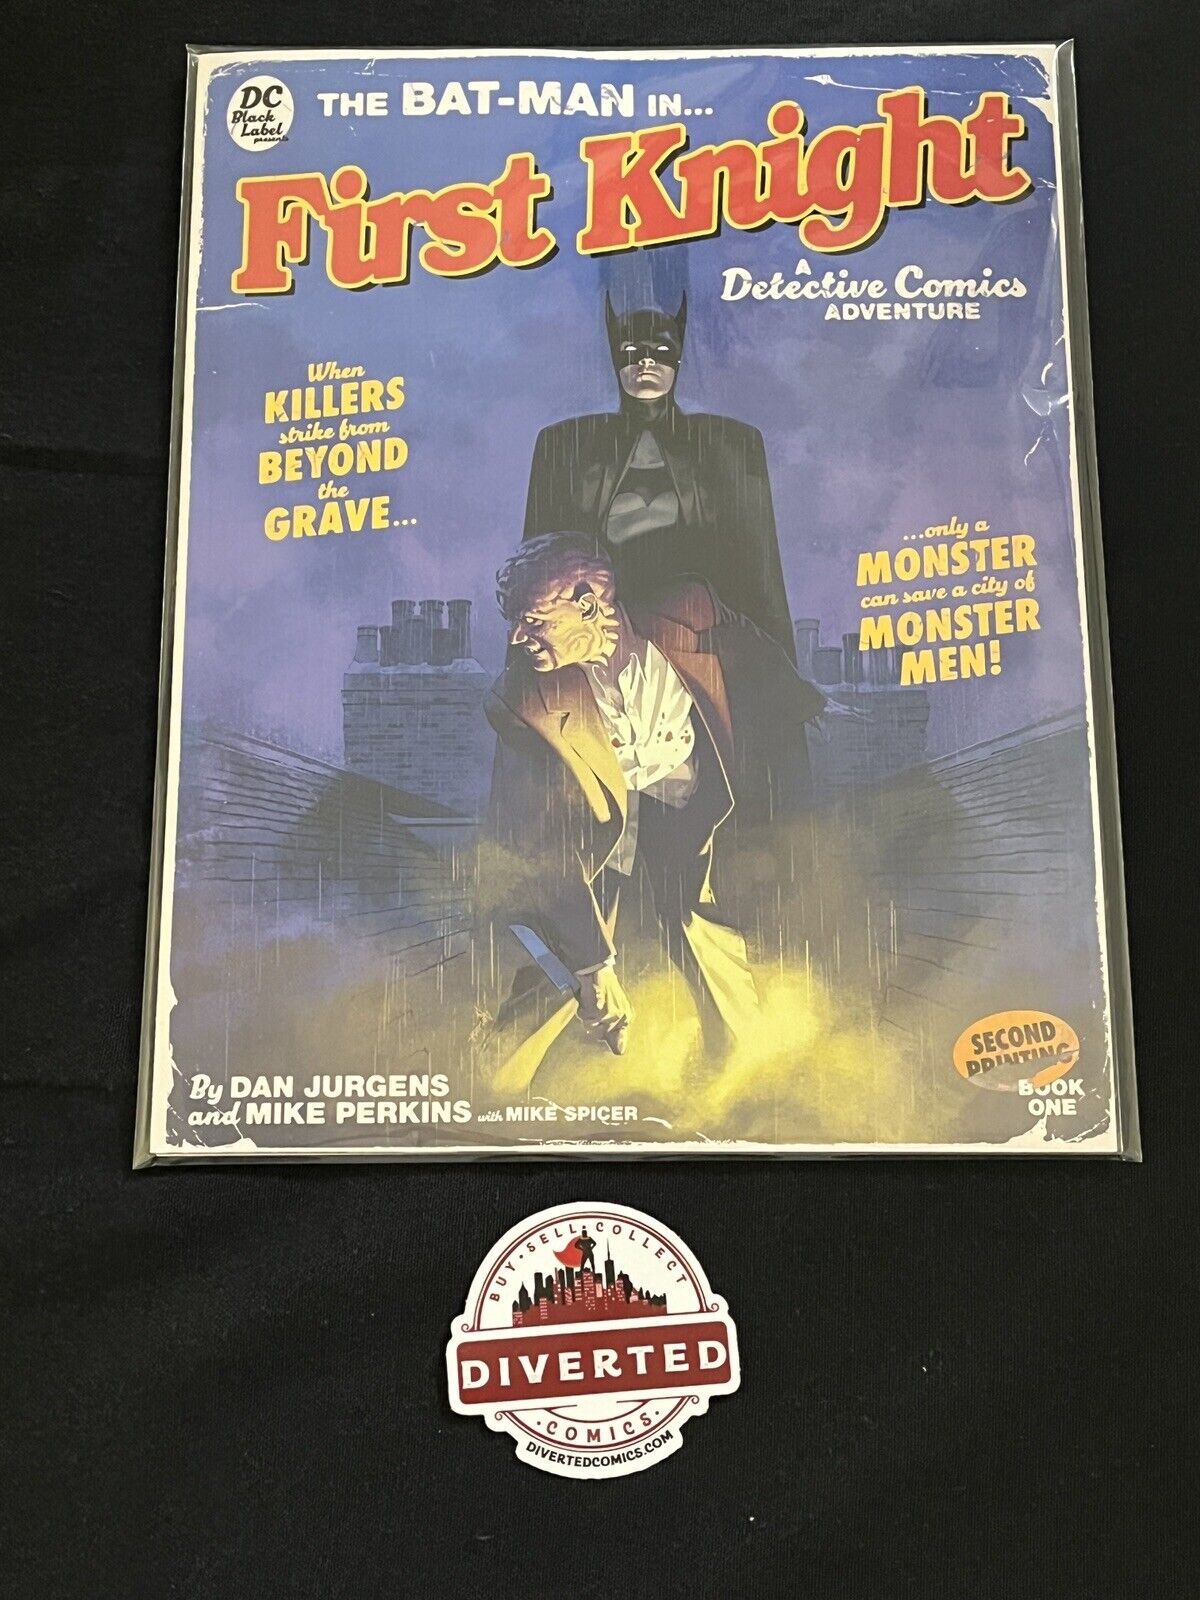 The Bat-Man First Knight #1 Pulp Novel Variant Second Printing (2415)